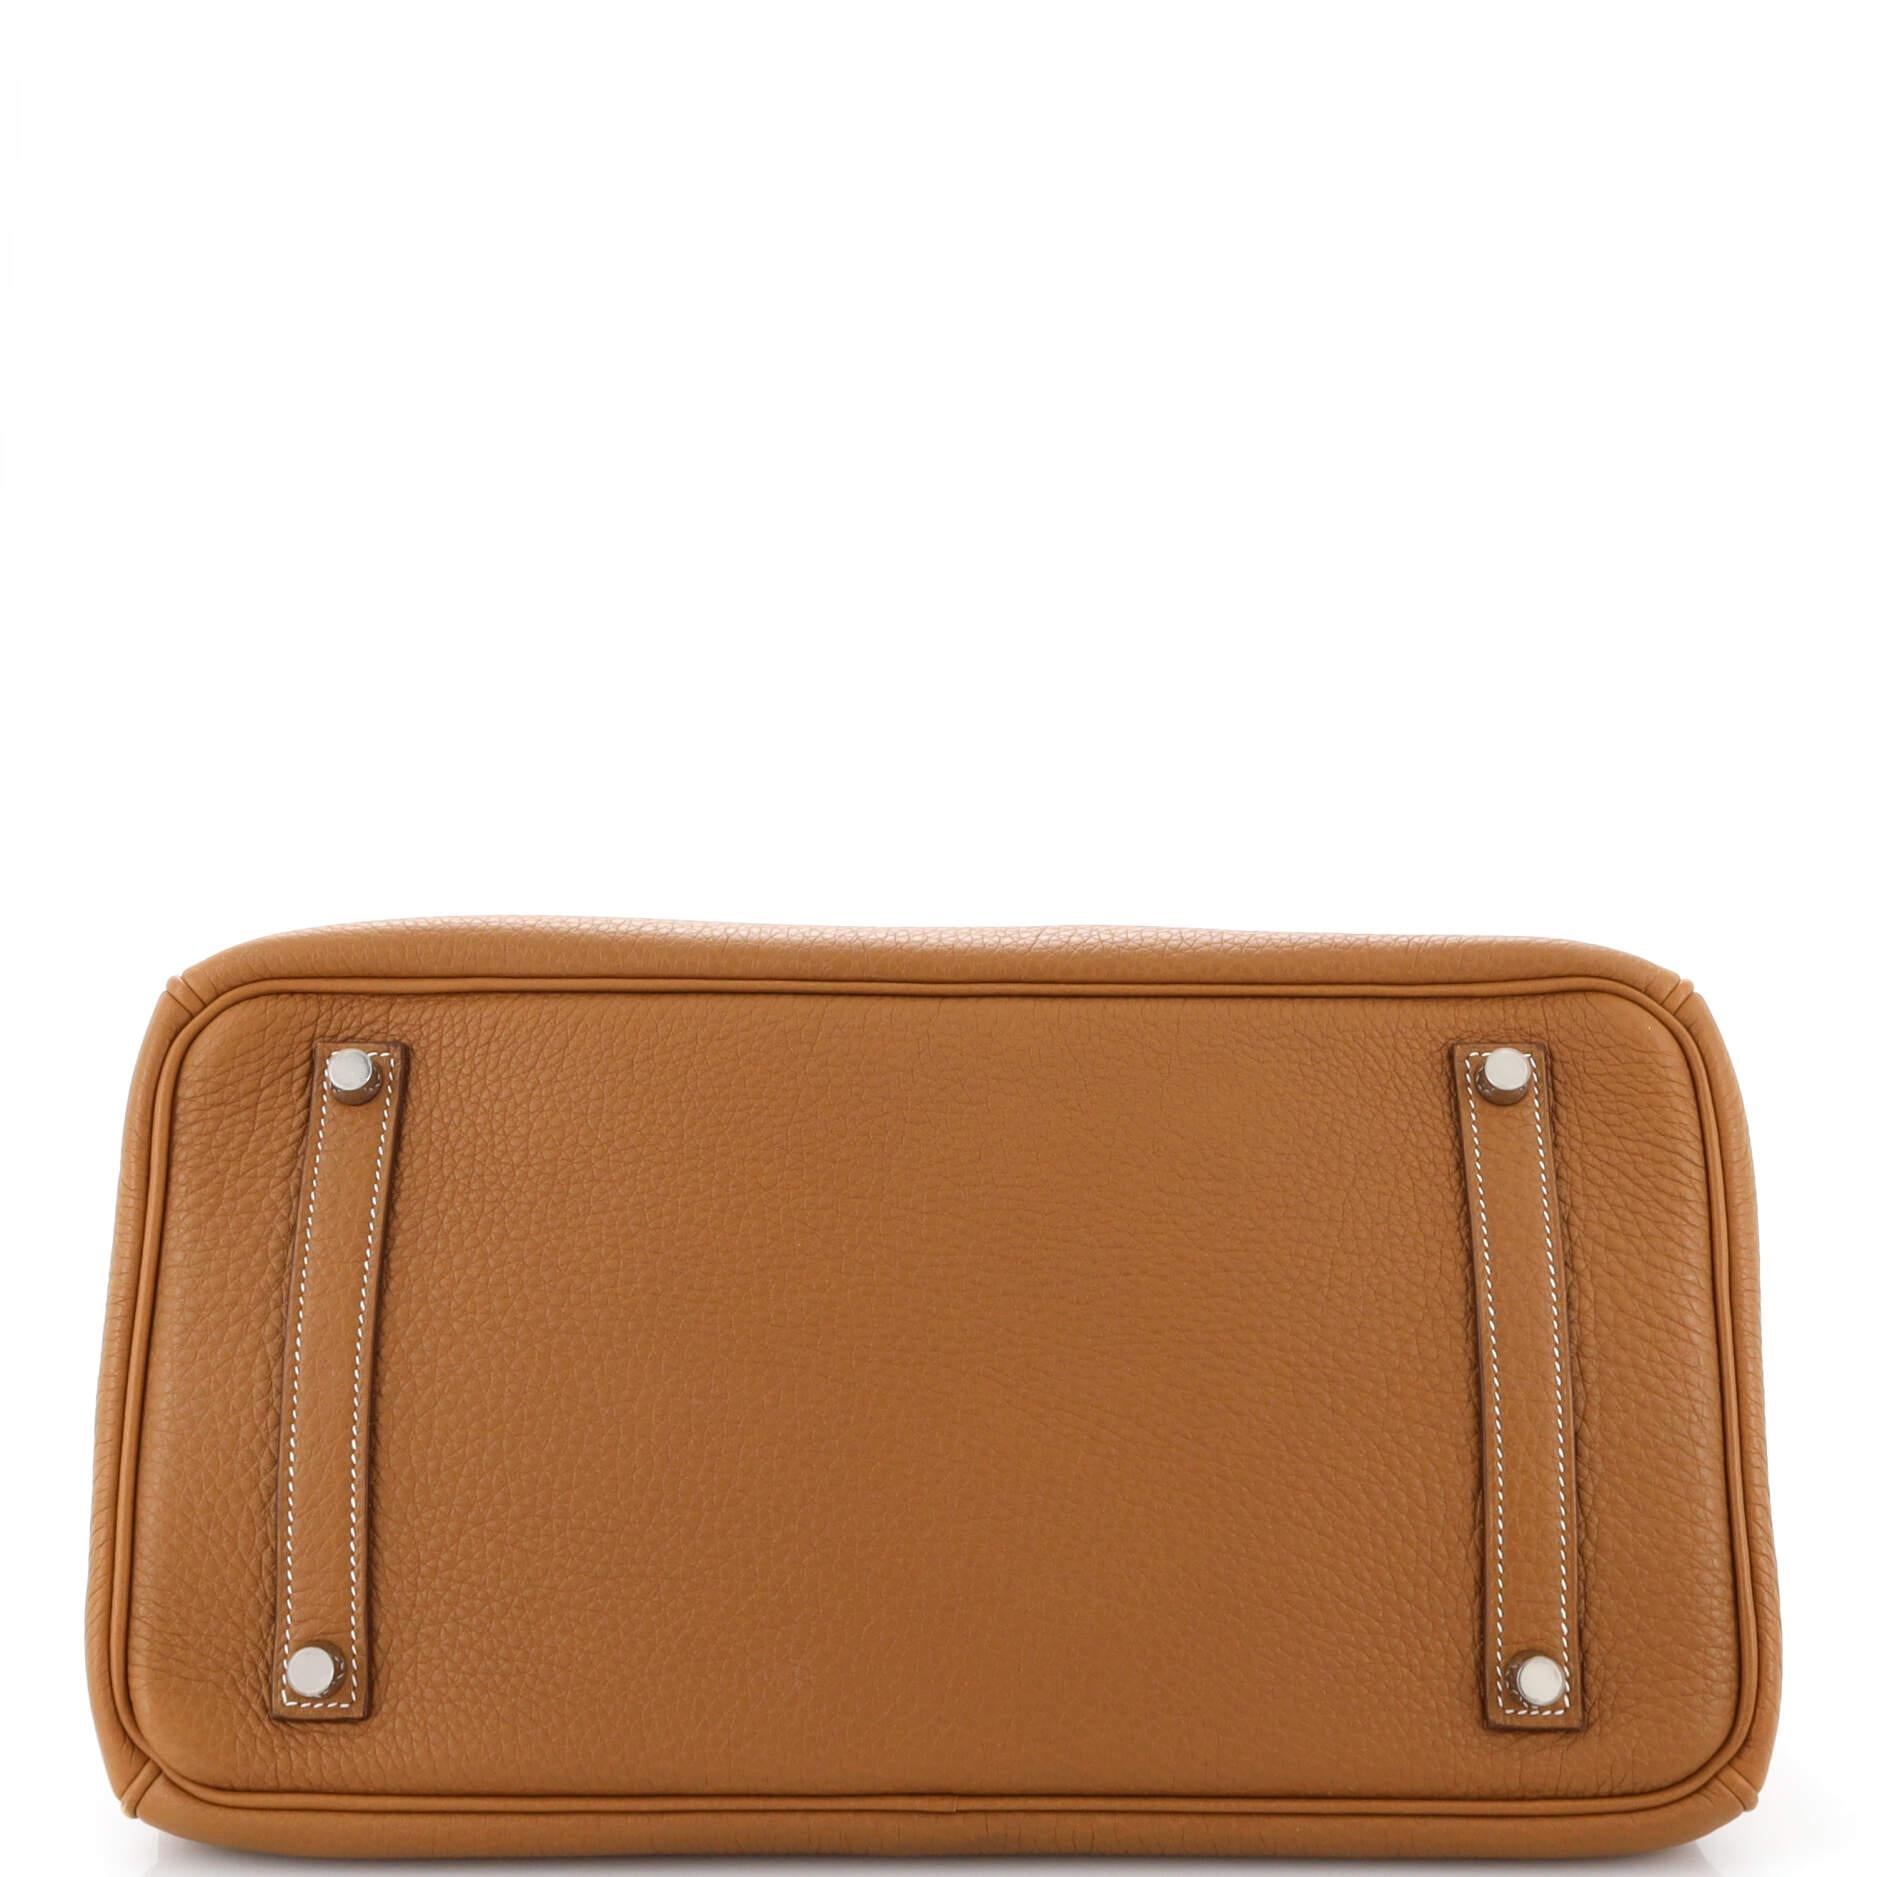 Hermes Birkin Handbag Gold Clemence with Palladium Hardware 35 For Sale 1